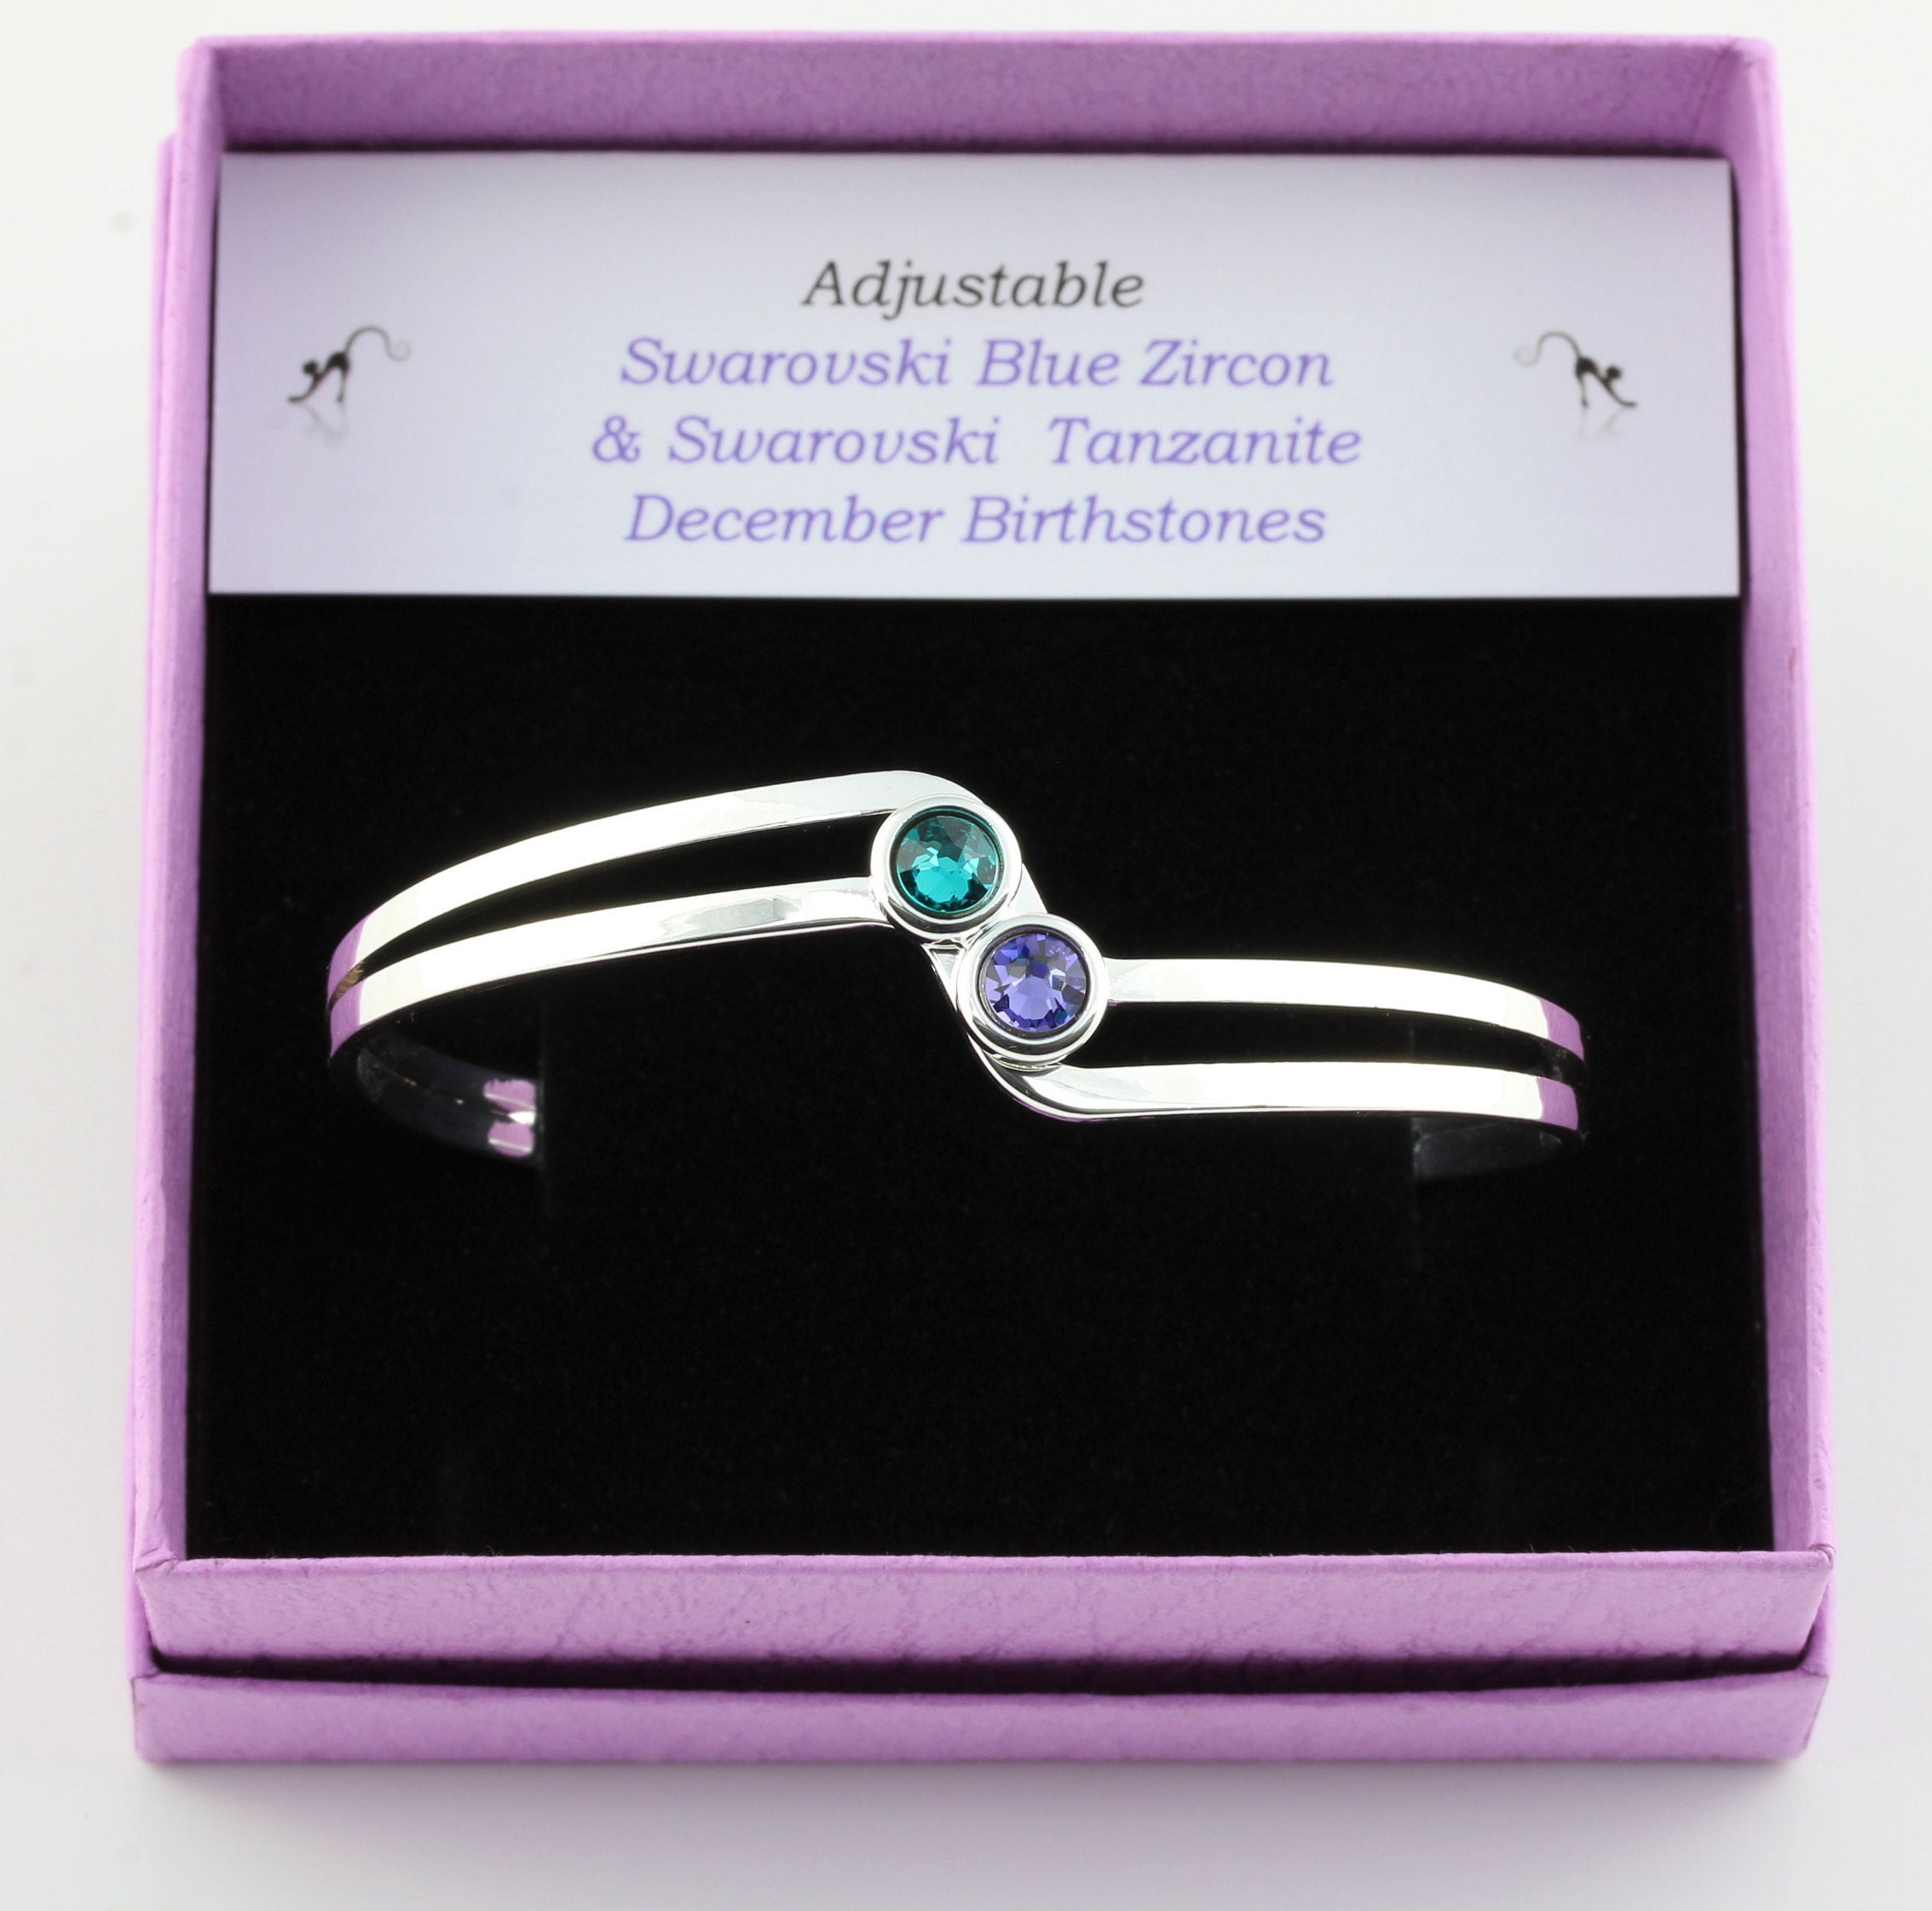 December Birthstones Swarovski Blue Zircon & Tanzanite Crystal Adjustable/Expandable Bangle